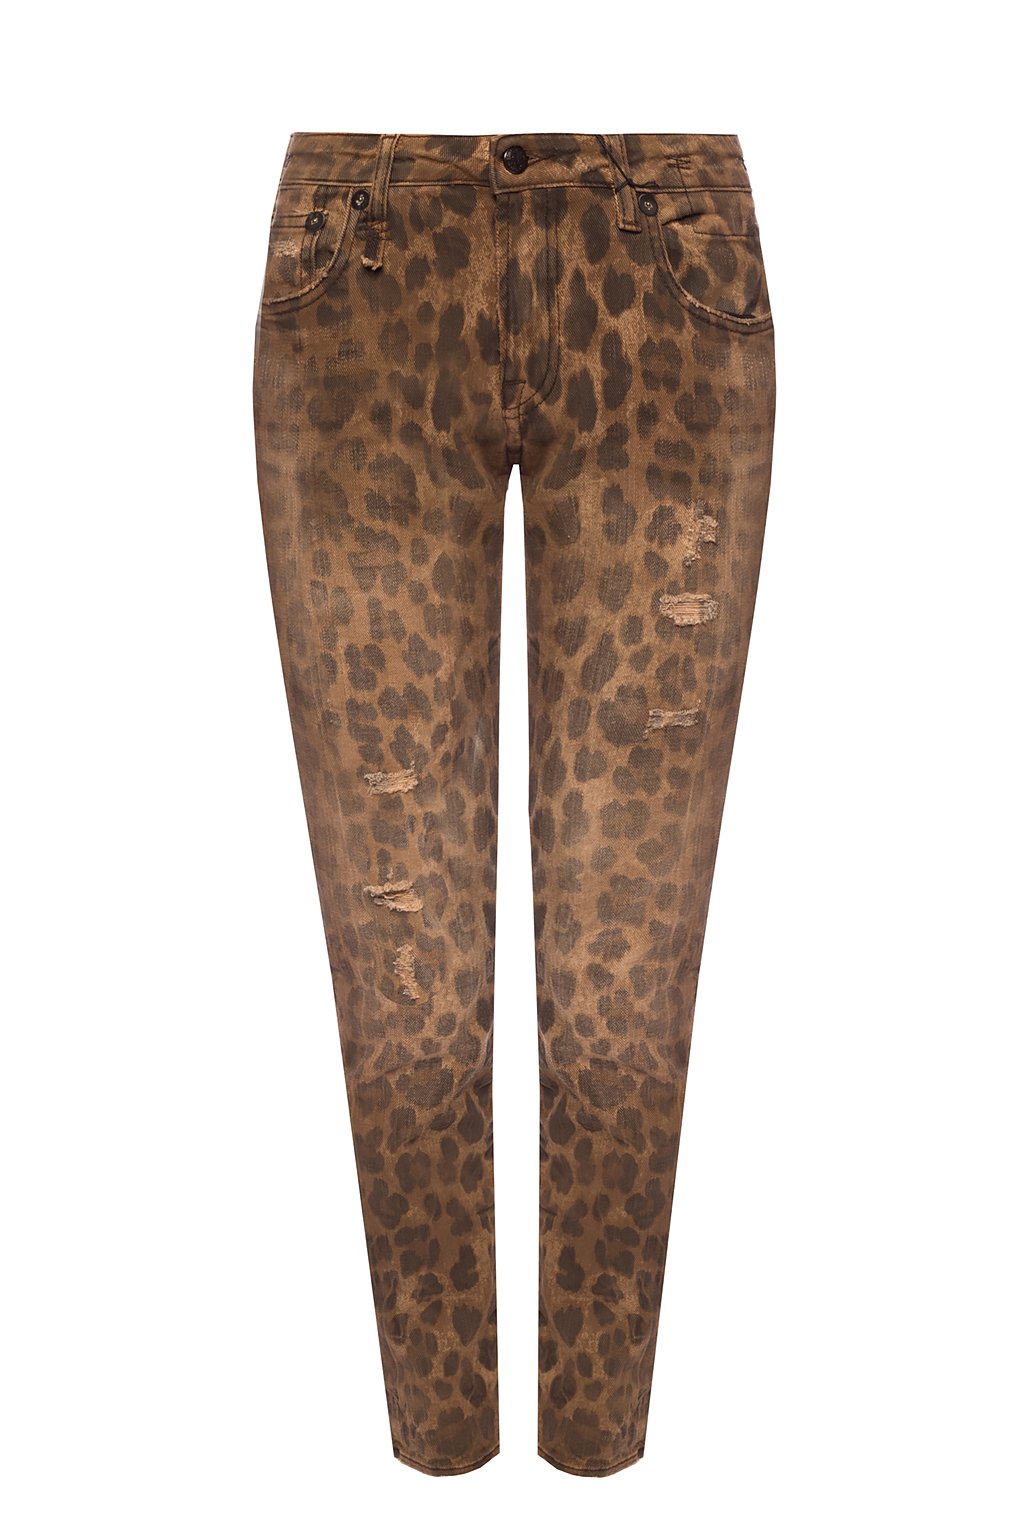 r13 leopard jeans